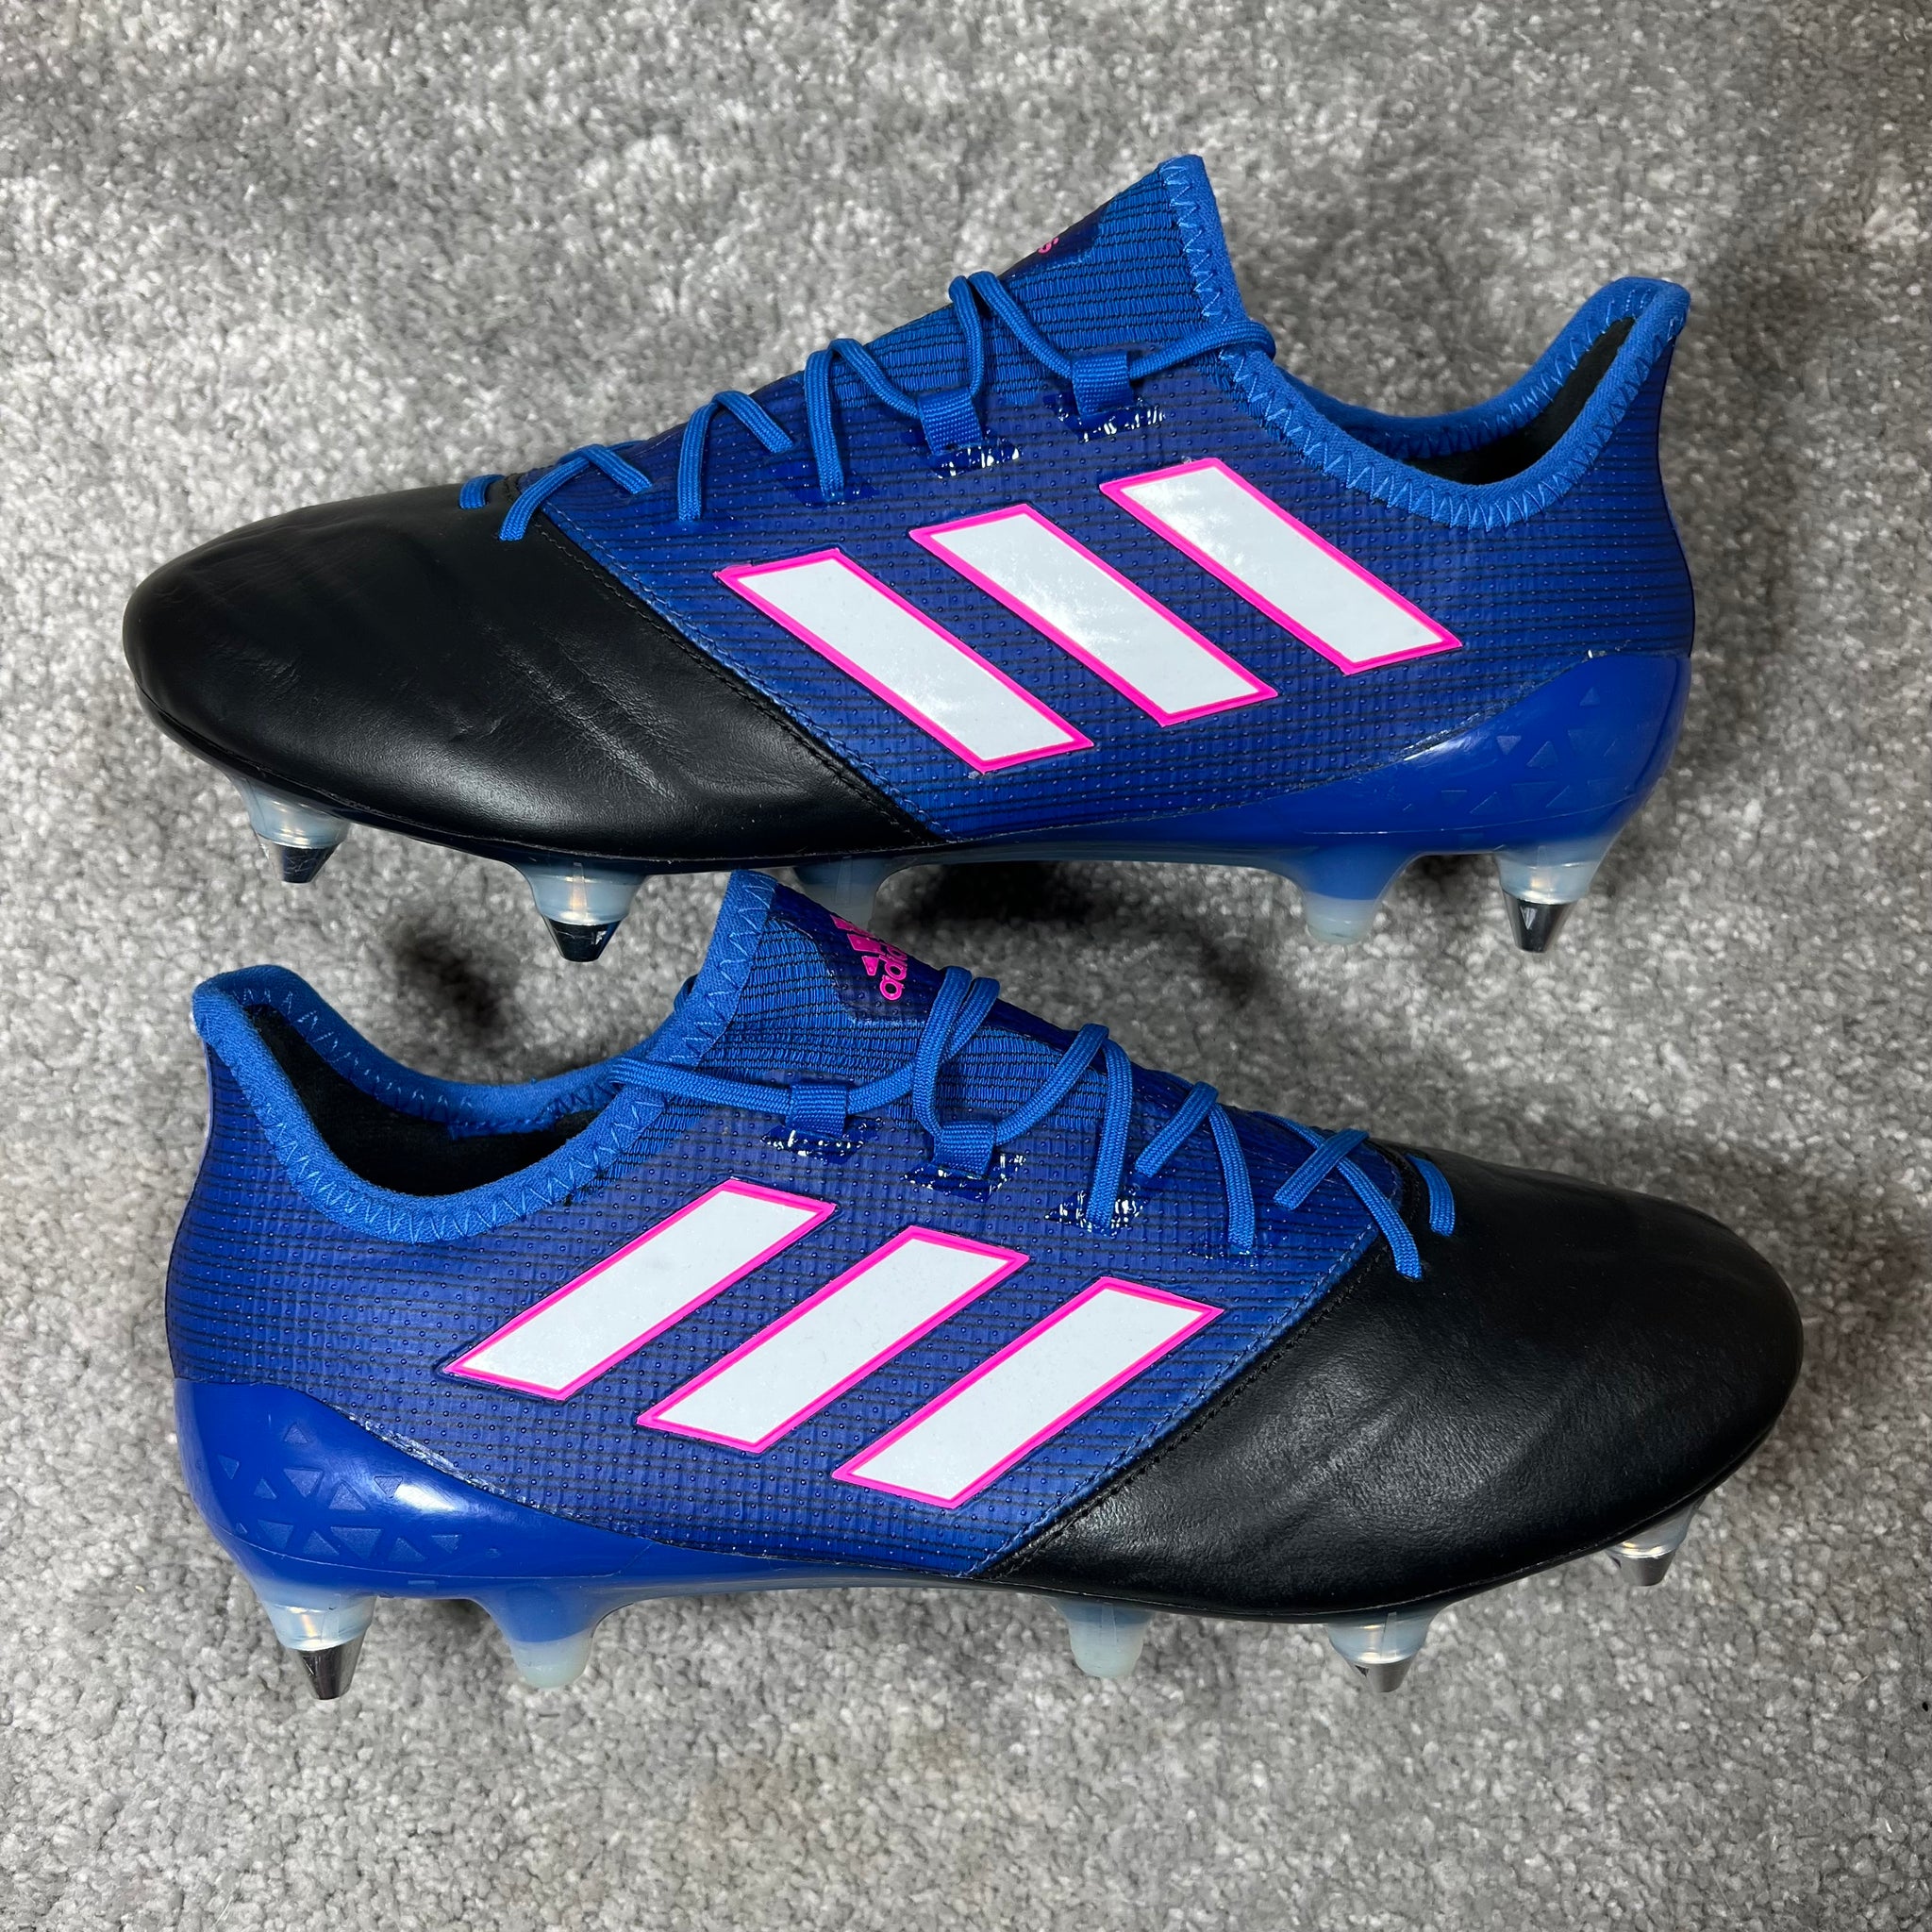 Adidas 17.1 Leather SG – The Football Capsule